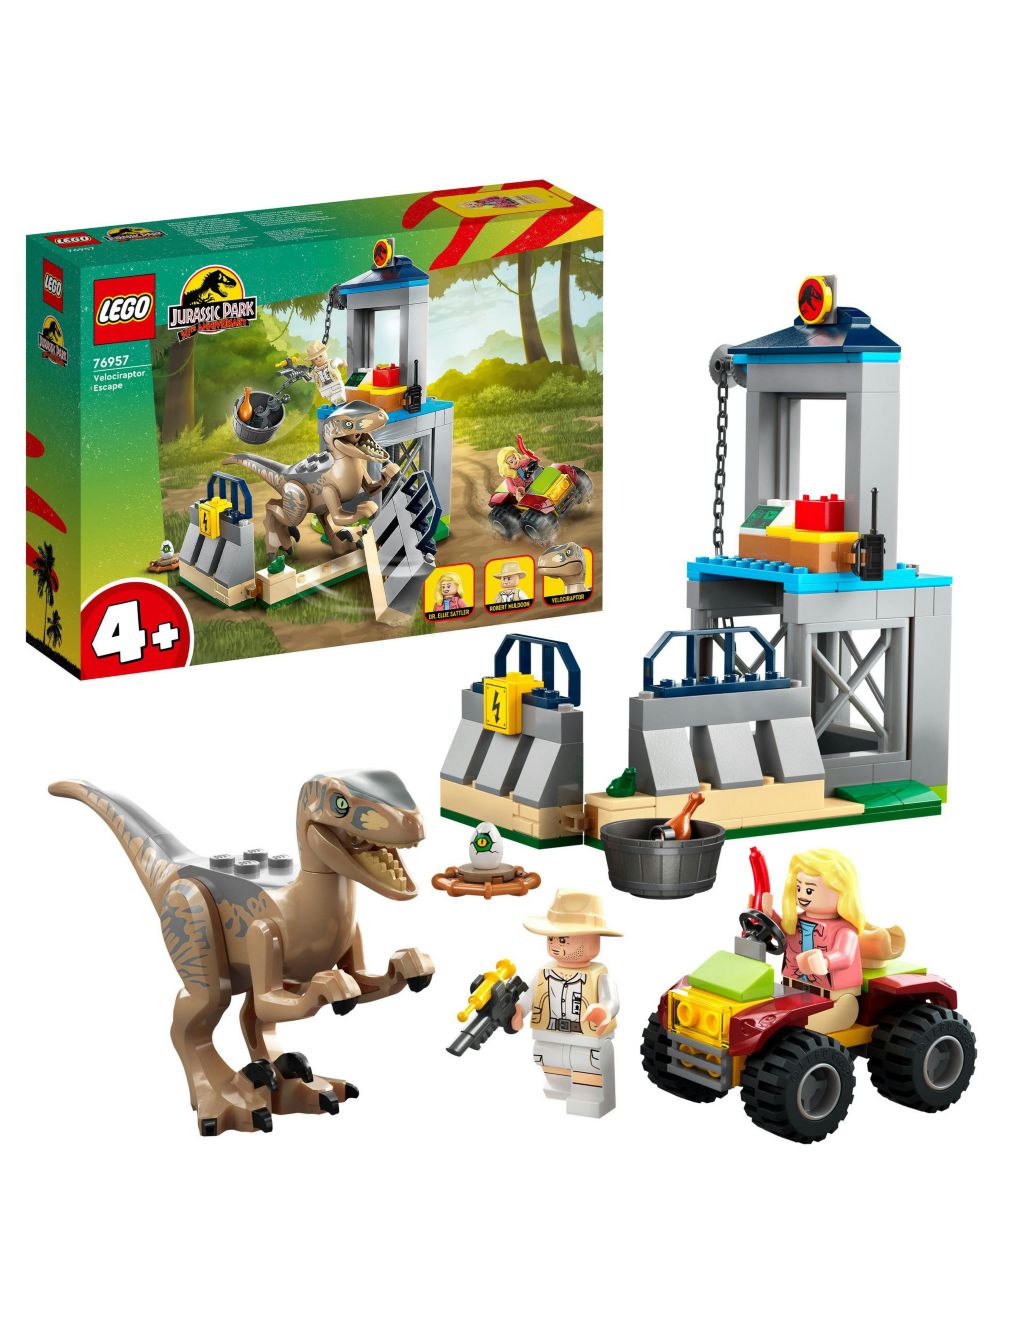 LEGO Jurassic Park Velociraptor Escape Toy Set (4+ Yrs) image 1